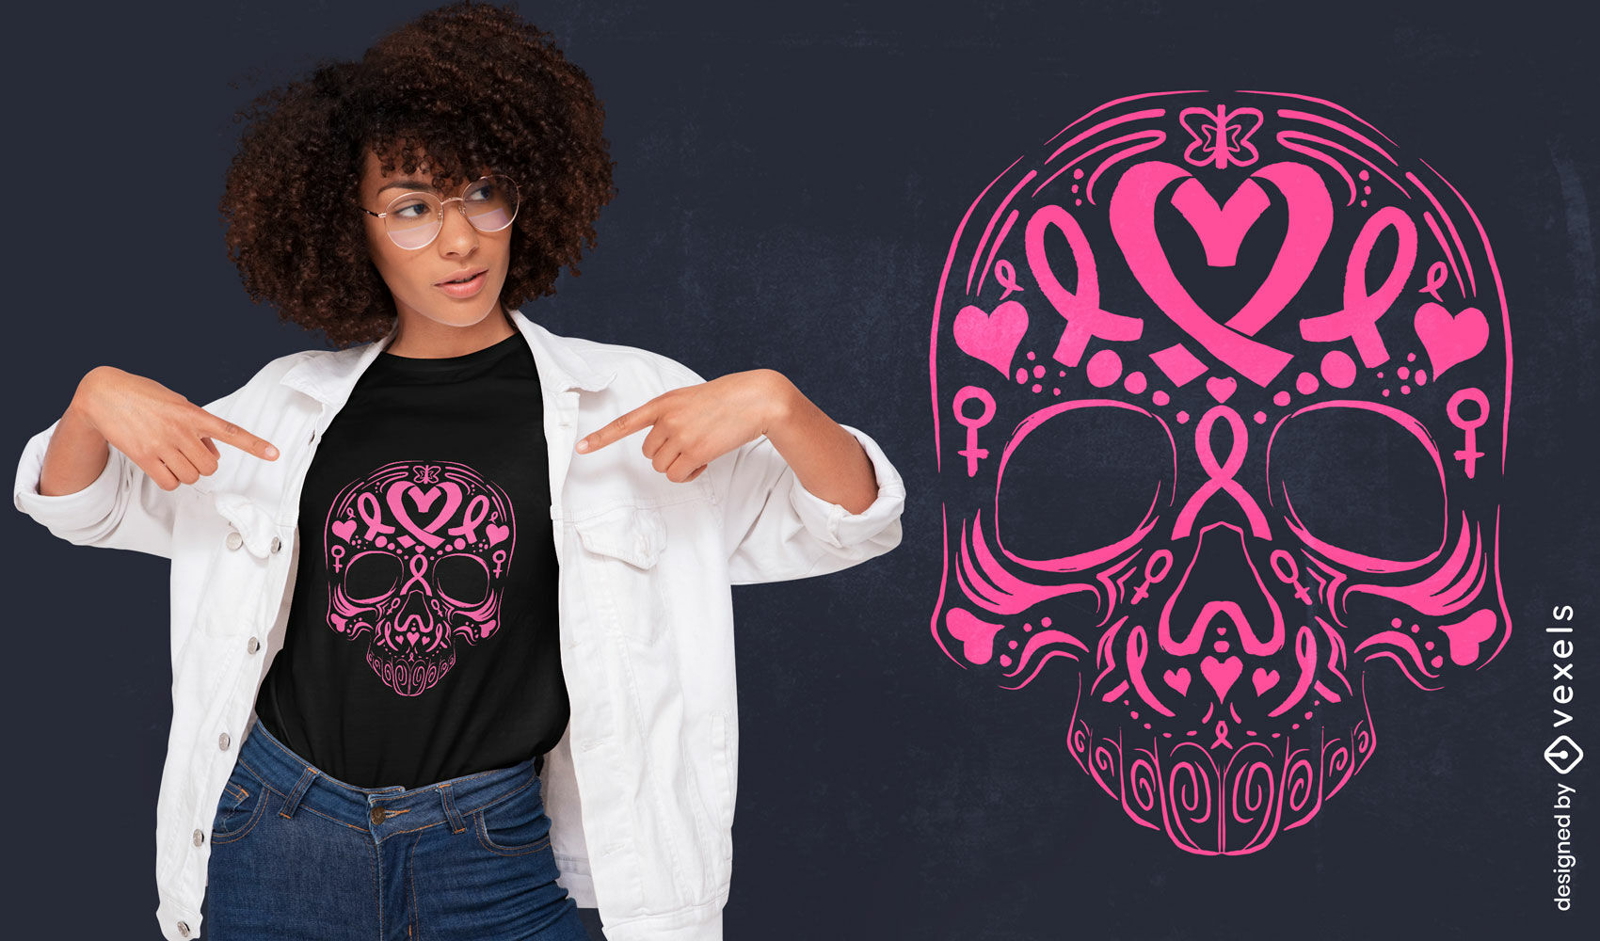 Skull breast cancer awareness t-shirt design